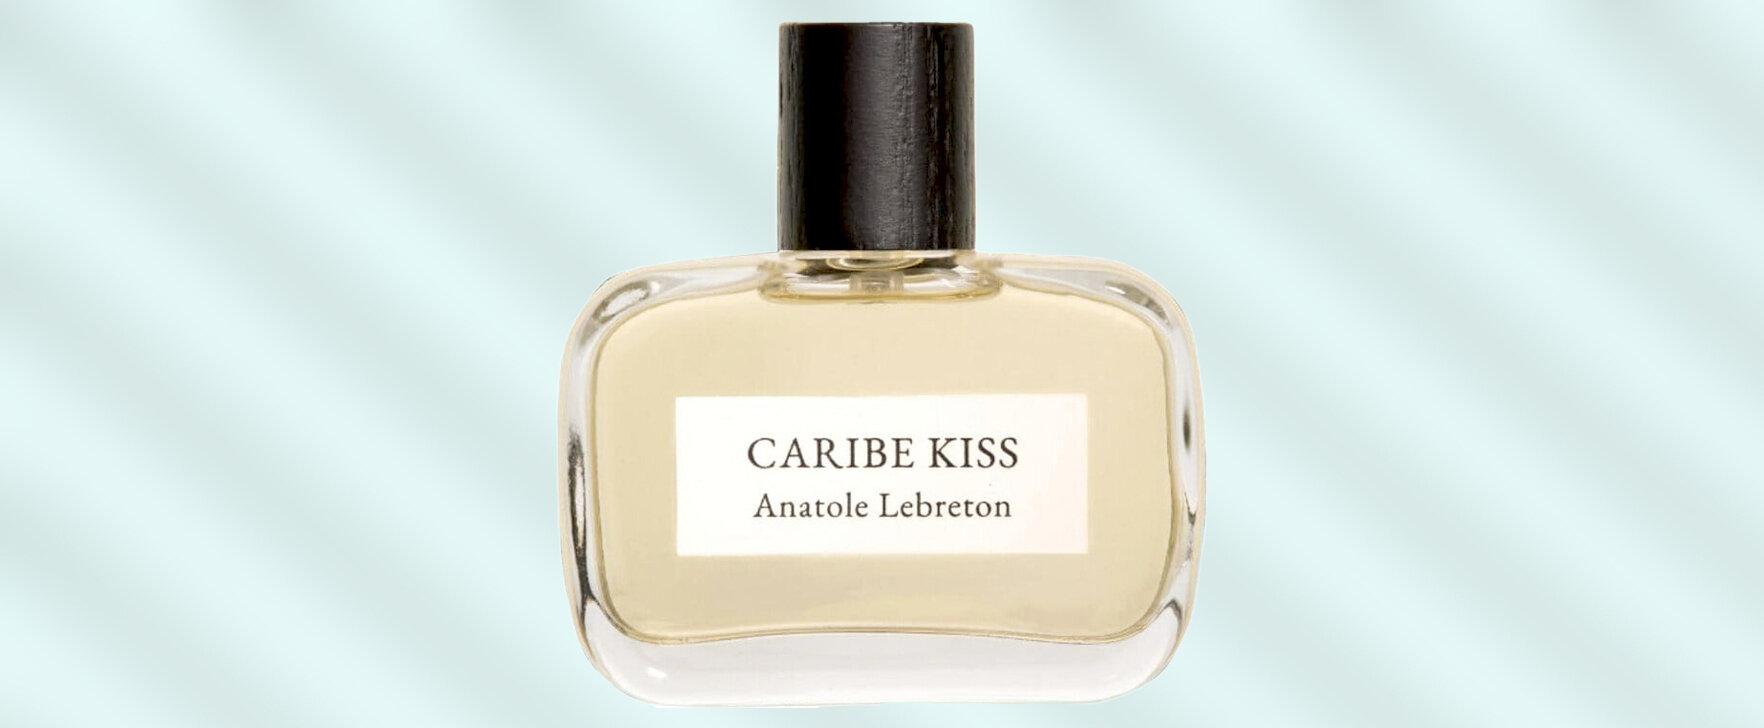 Tropical Fusion: The New Eau de Parfum Caribe Kiss by Anatole Lebreton